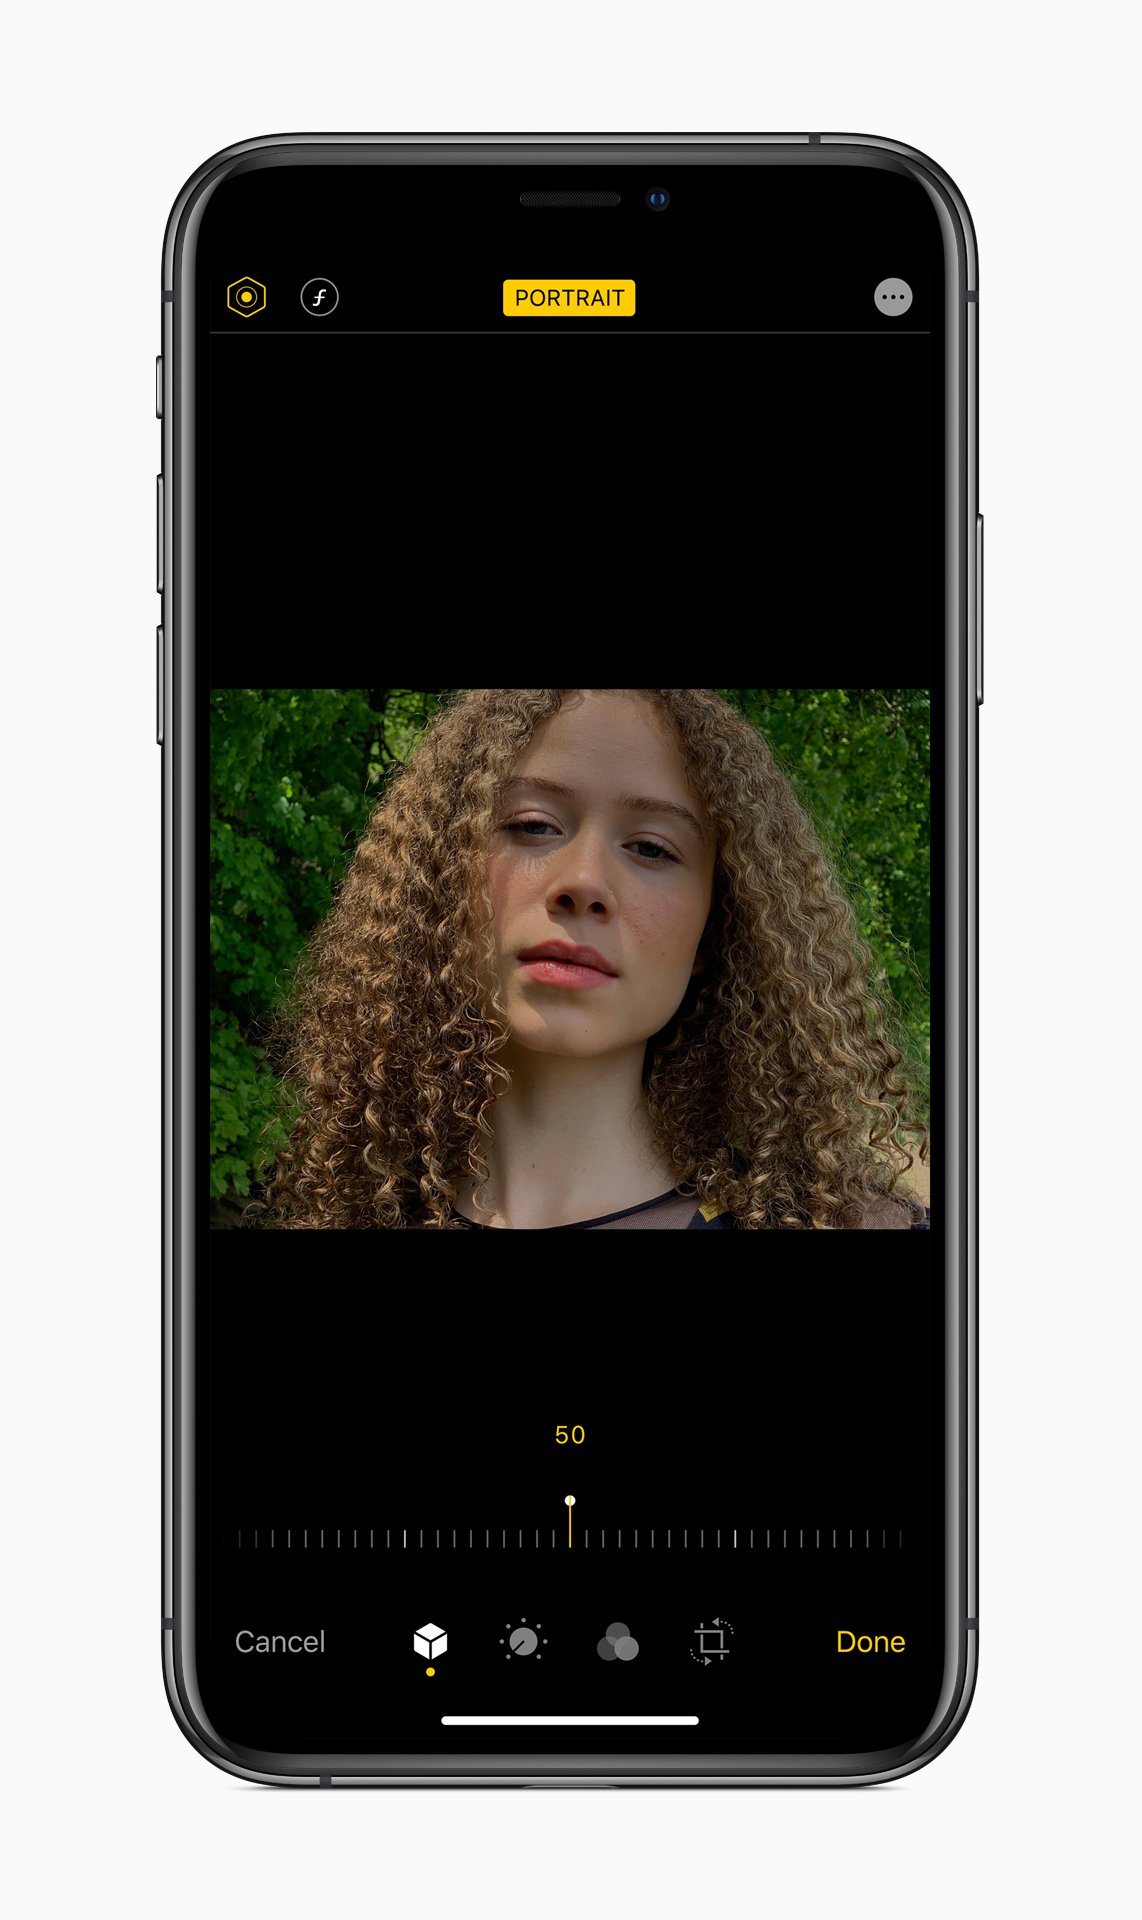 iOS 13 portrait mode